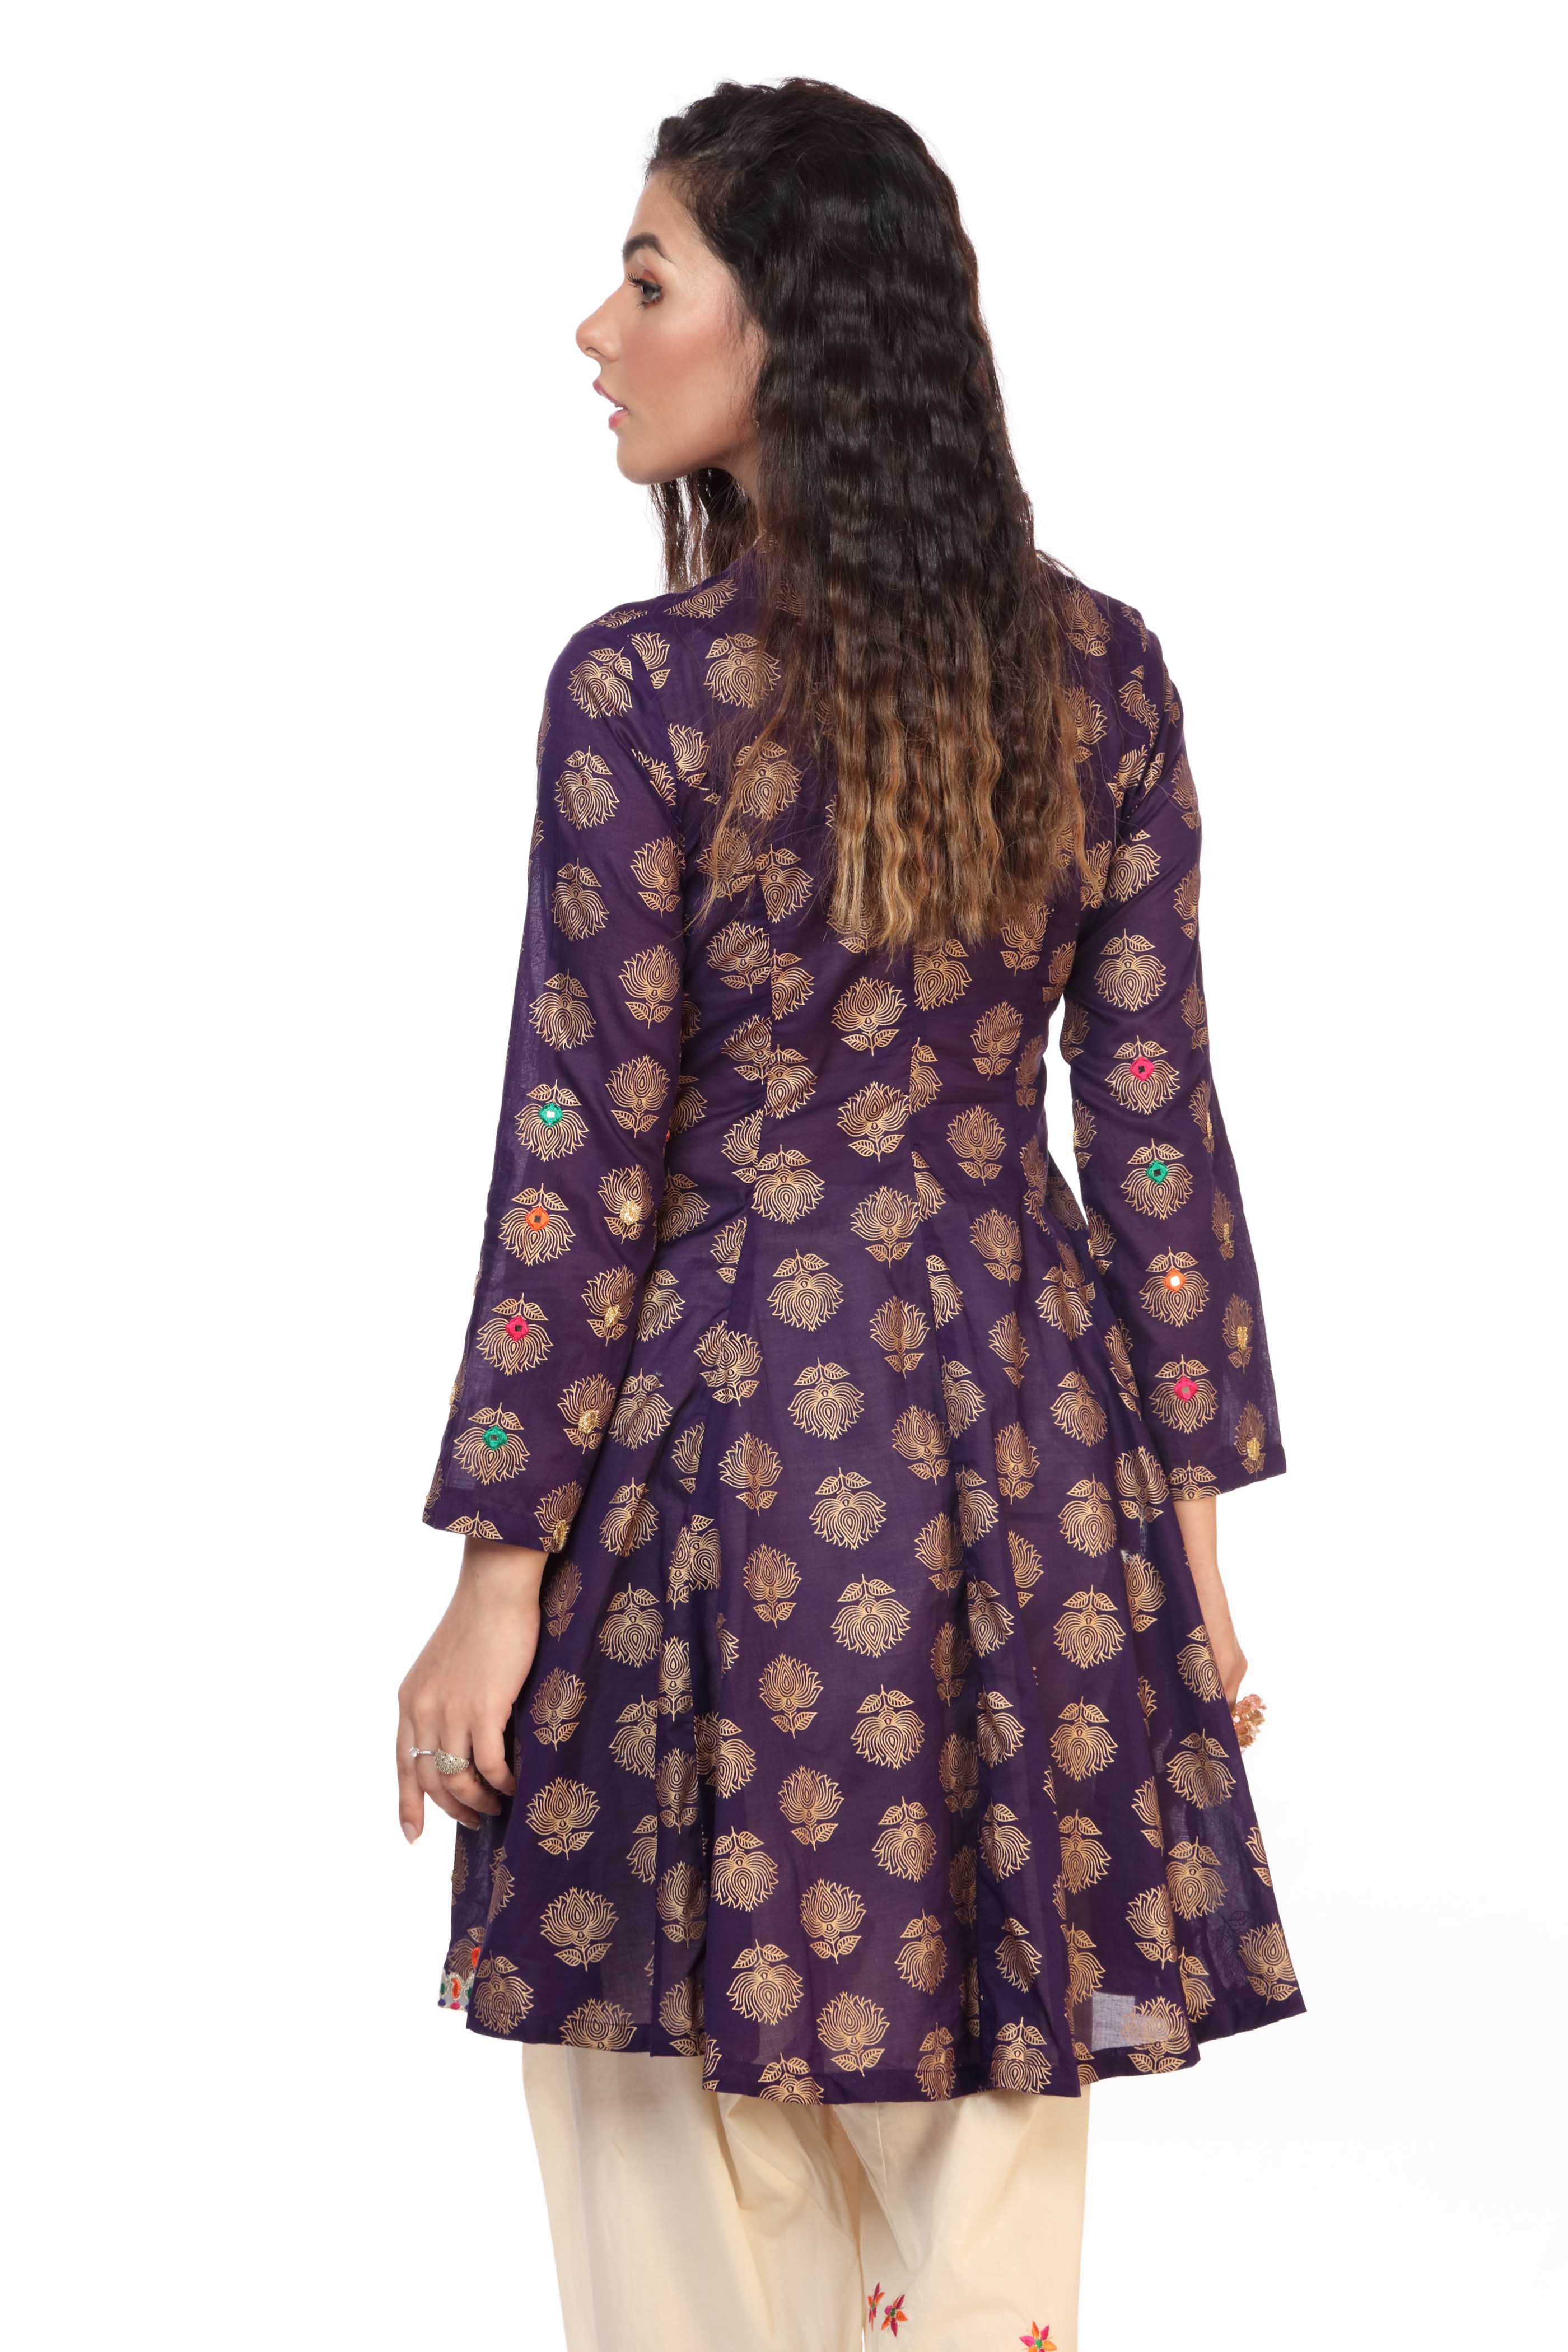 Sheesha Chatta Lt in Purple coloured Printed Lawn fabric 3